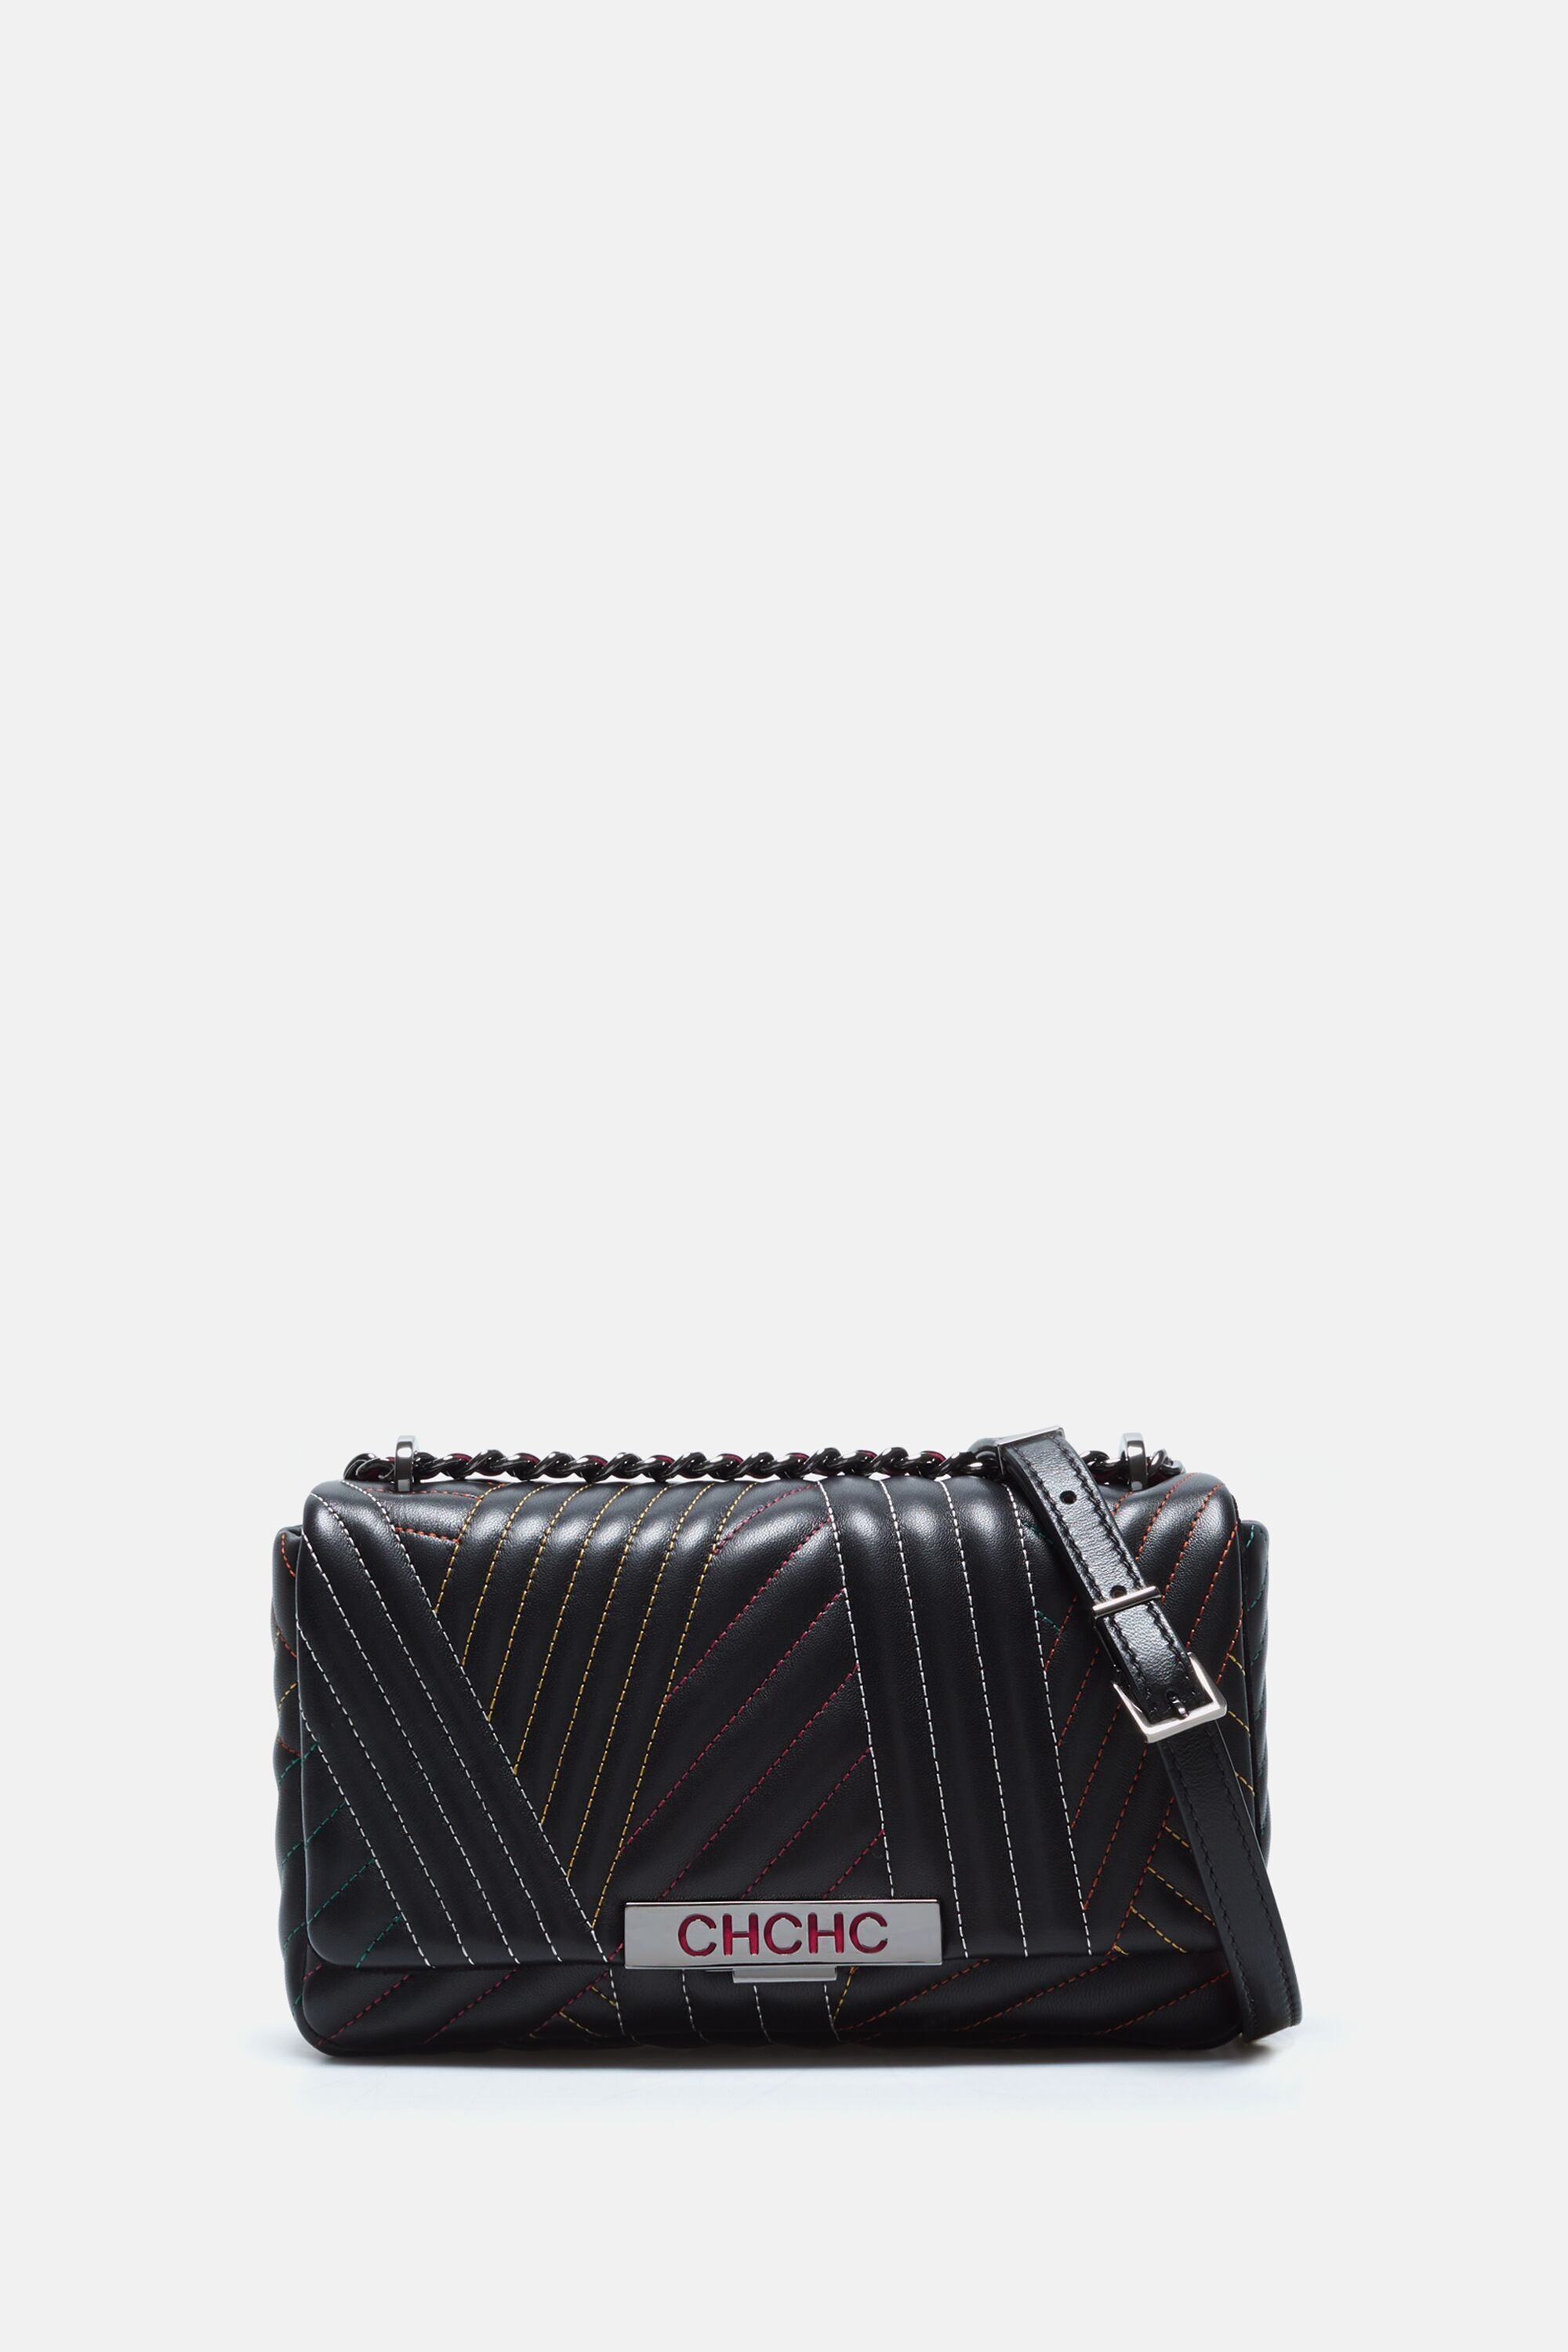 Bimba Satchel 9  Small handbag black - CH Carolina Herrera United States